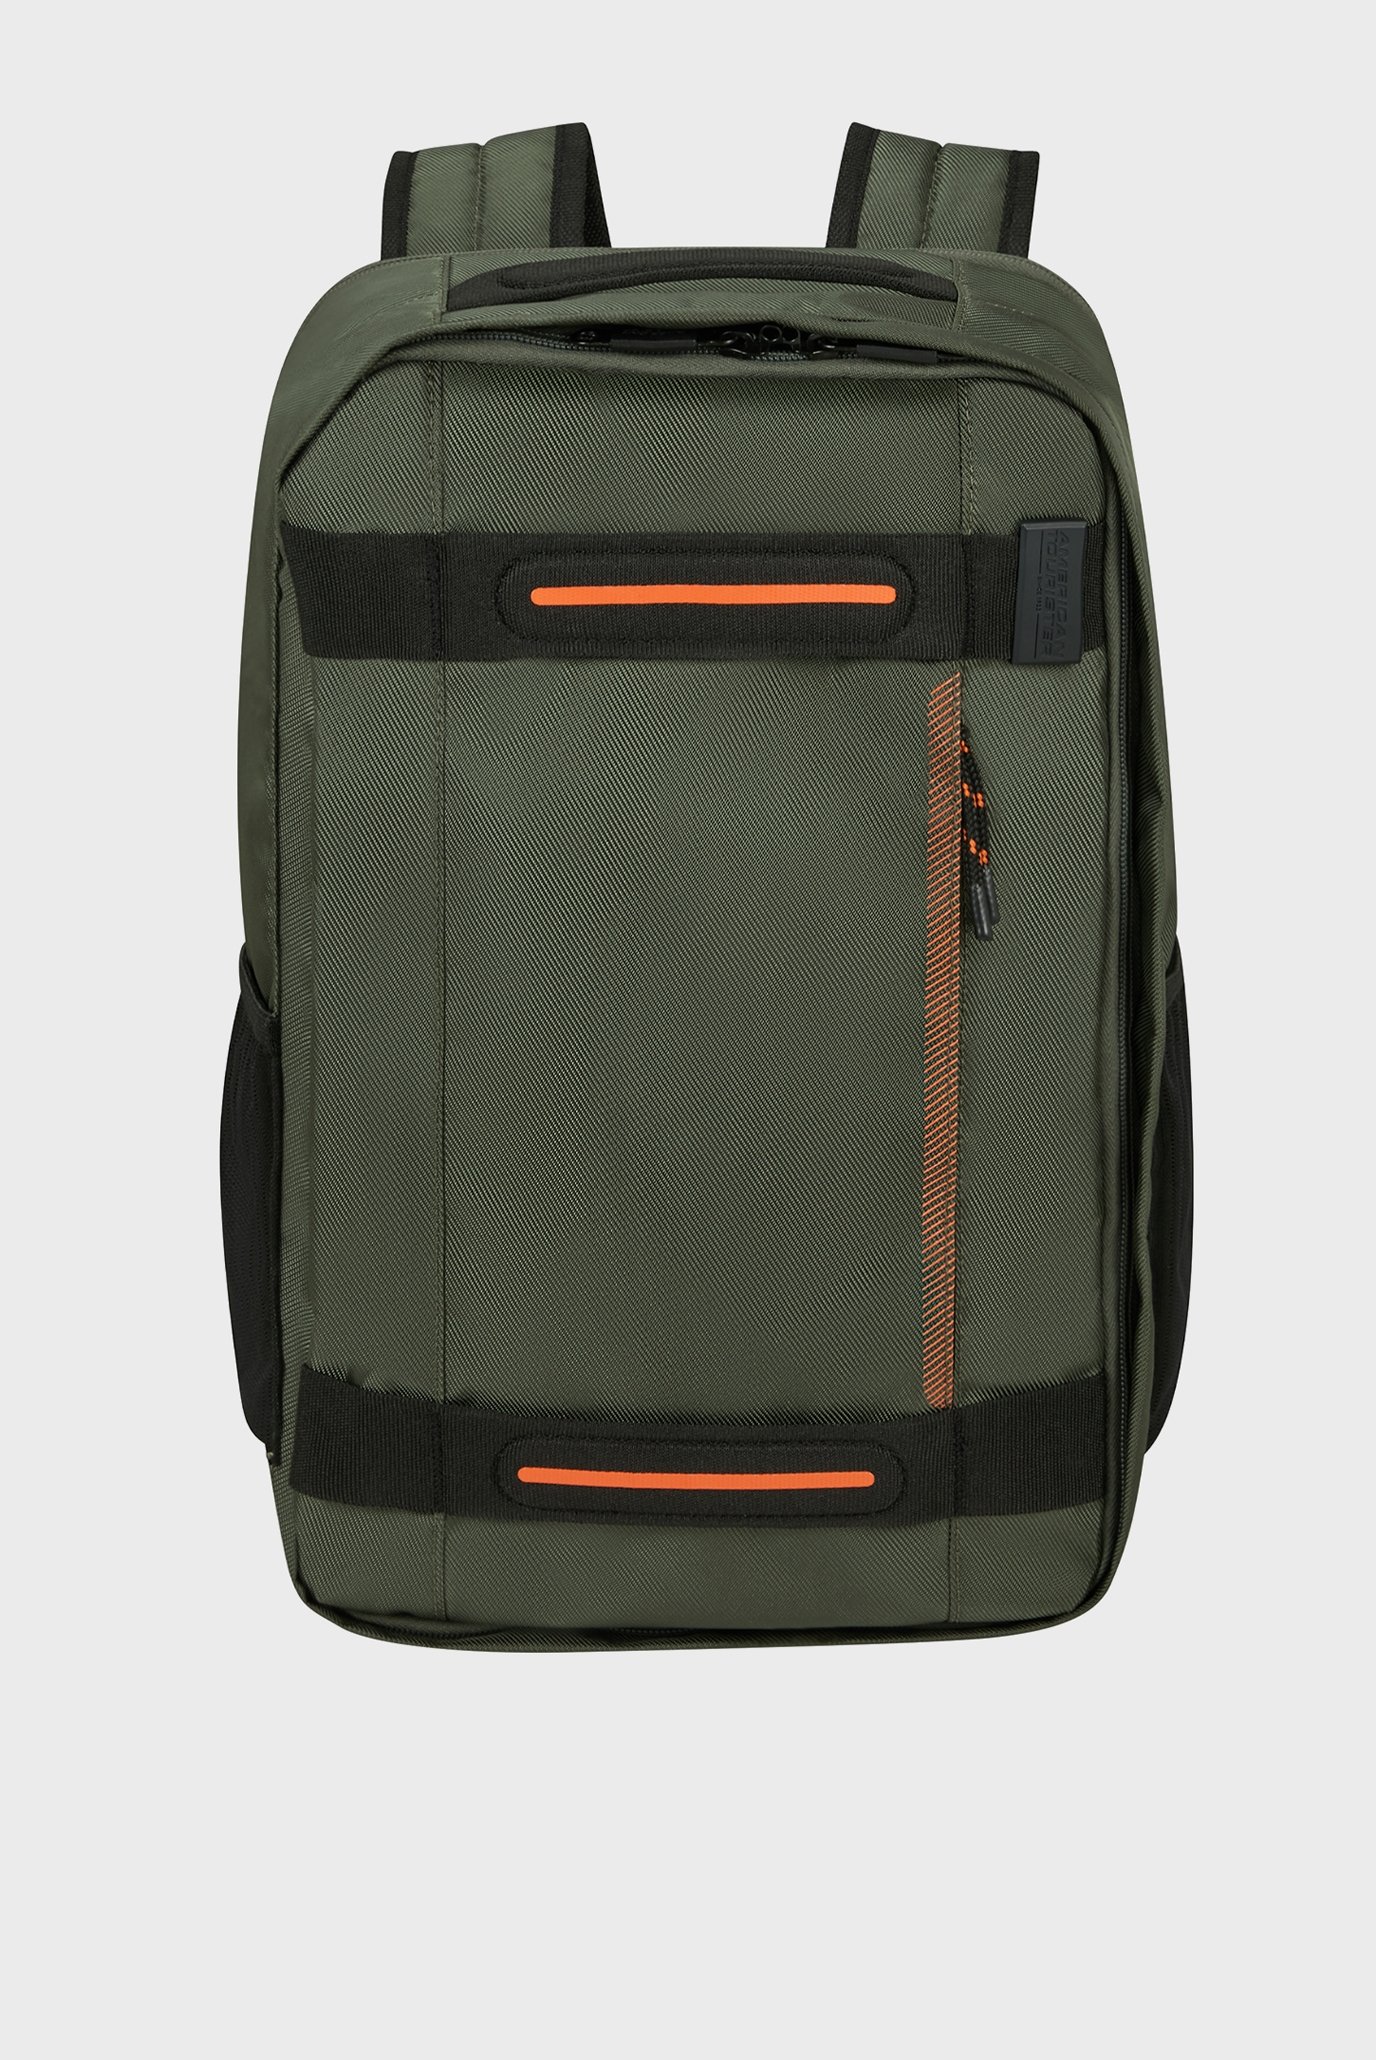 Мужской зеленый рюкзак URBAN TRACK 1